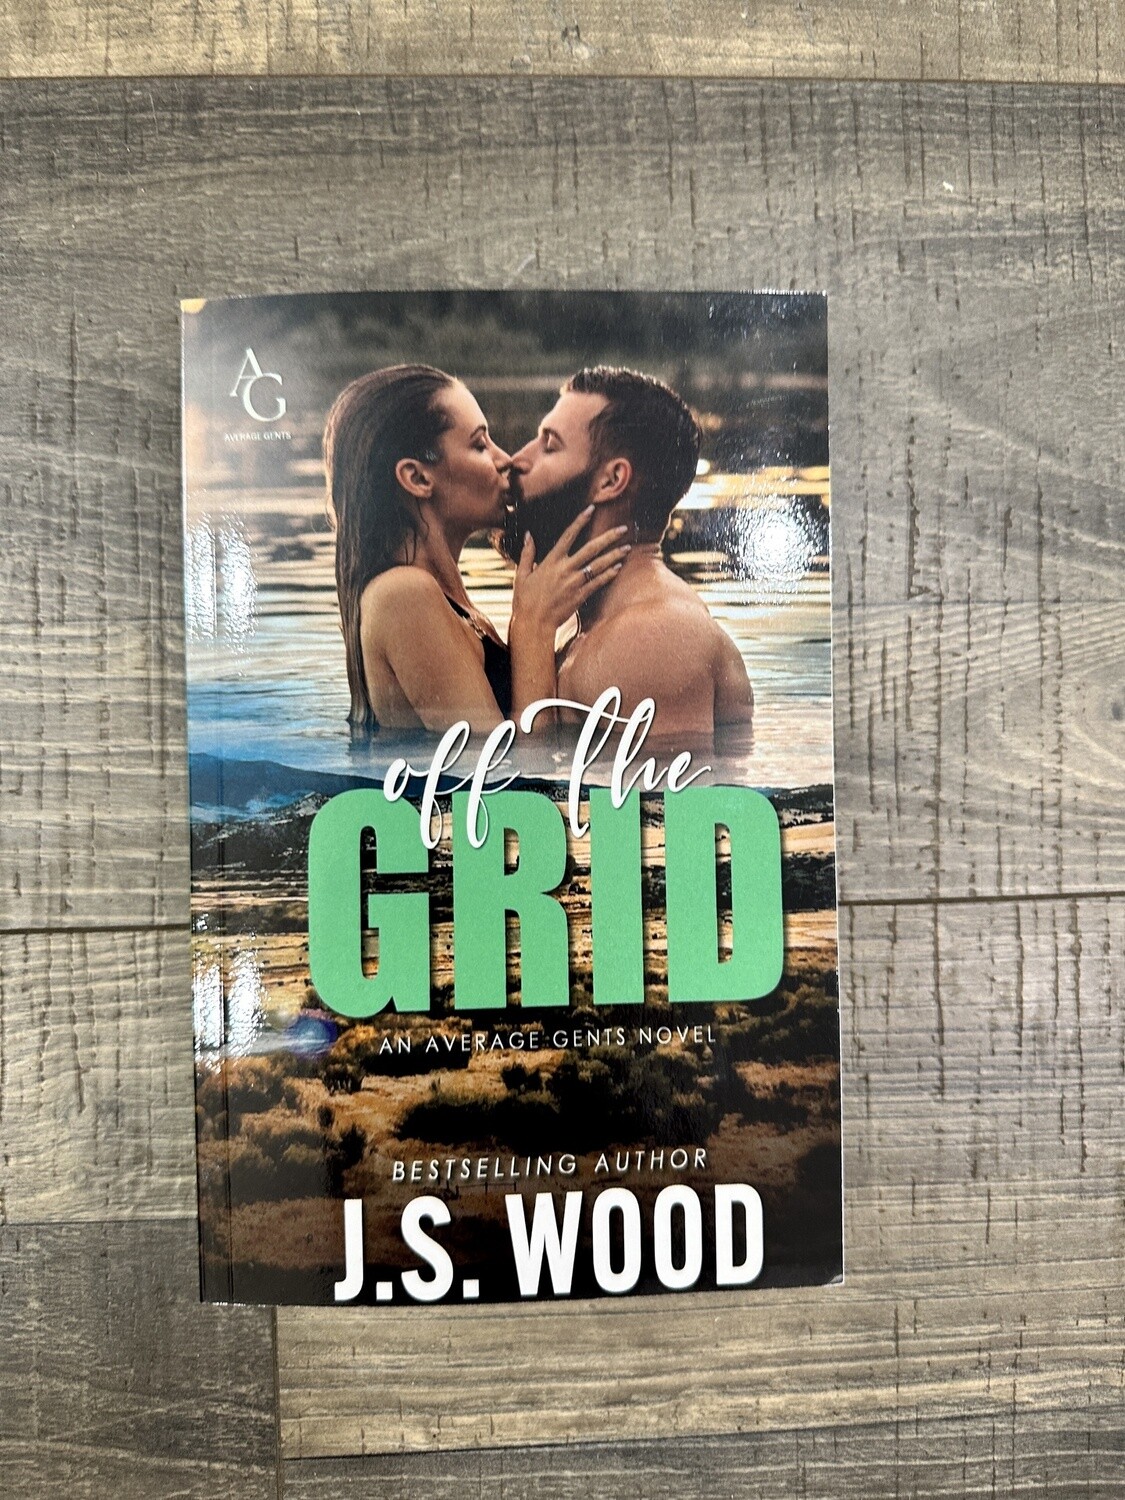 Wood, J.S.-Off the Grid, Book Type: Original